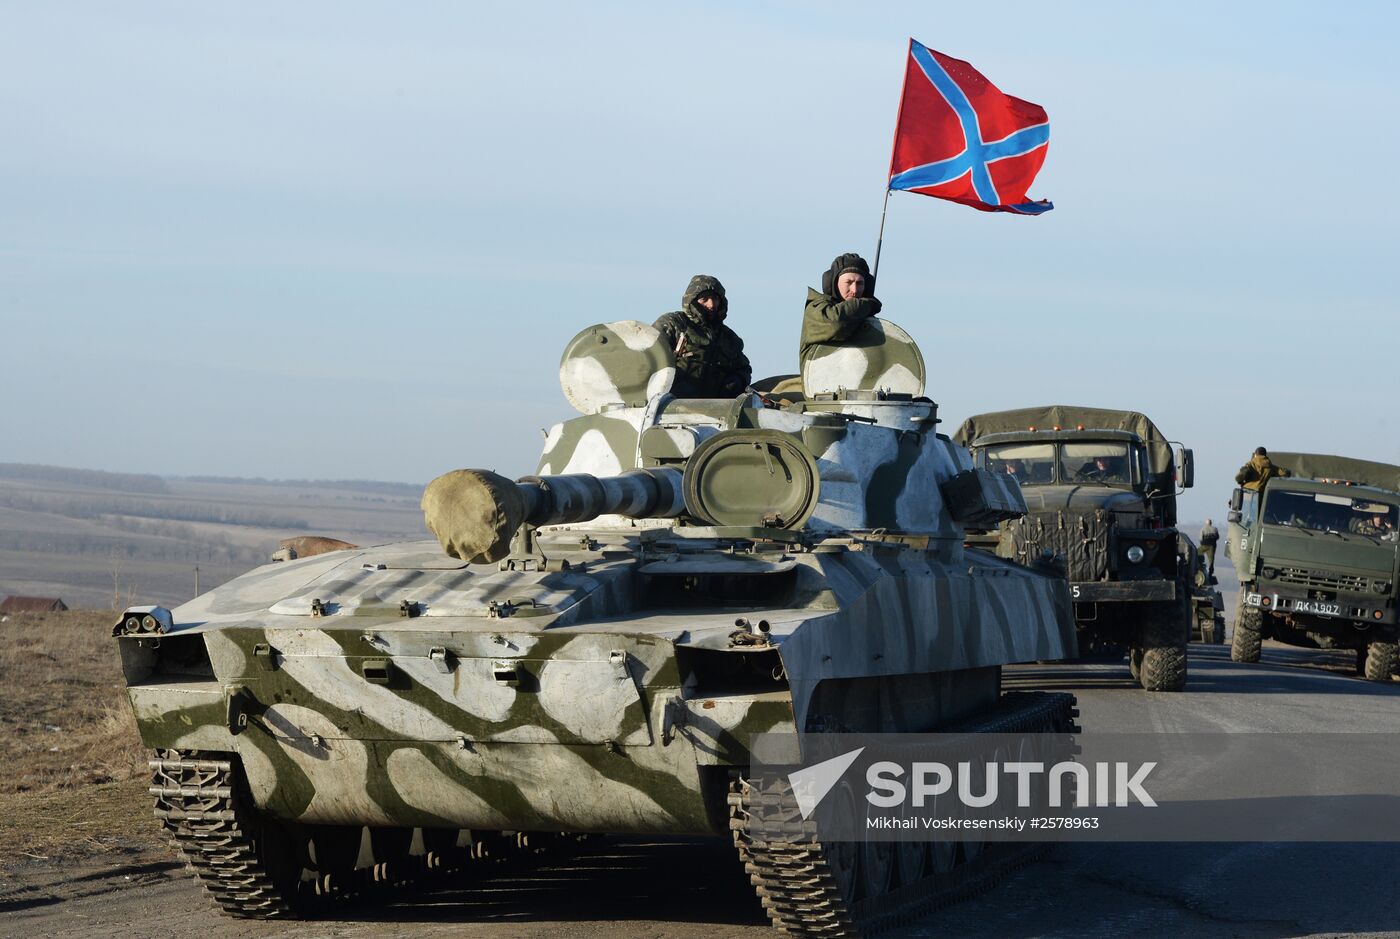 DPR withdraws heavy military equipment from Donetsk Region